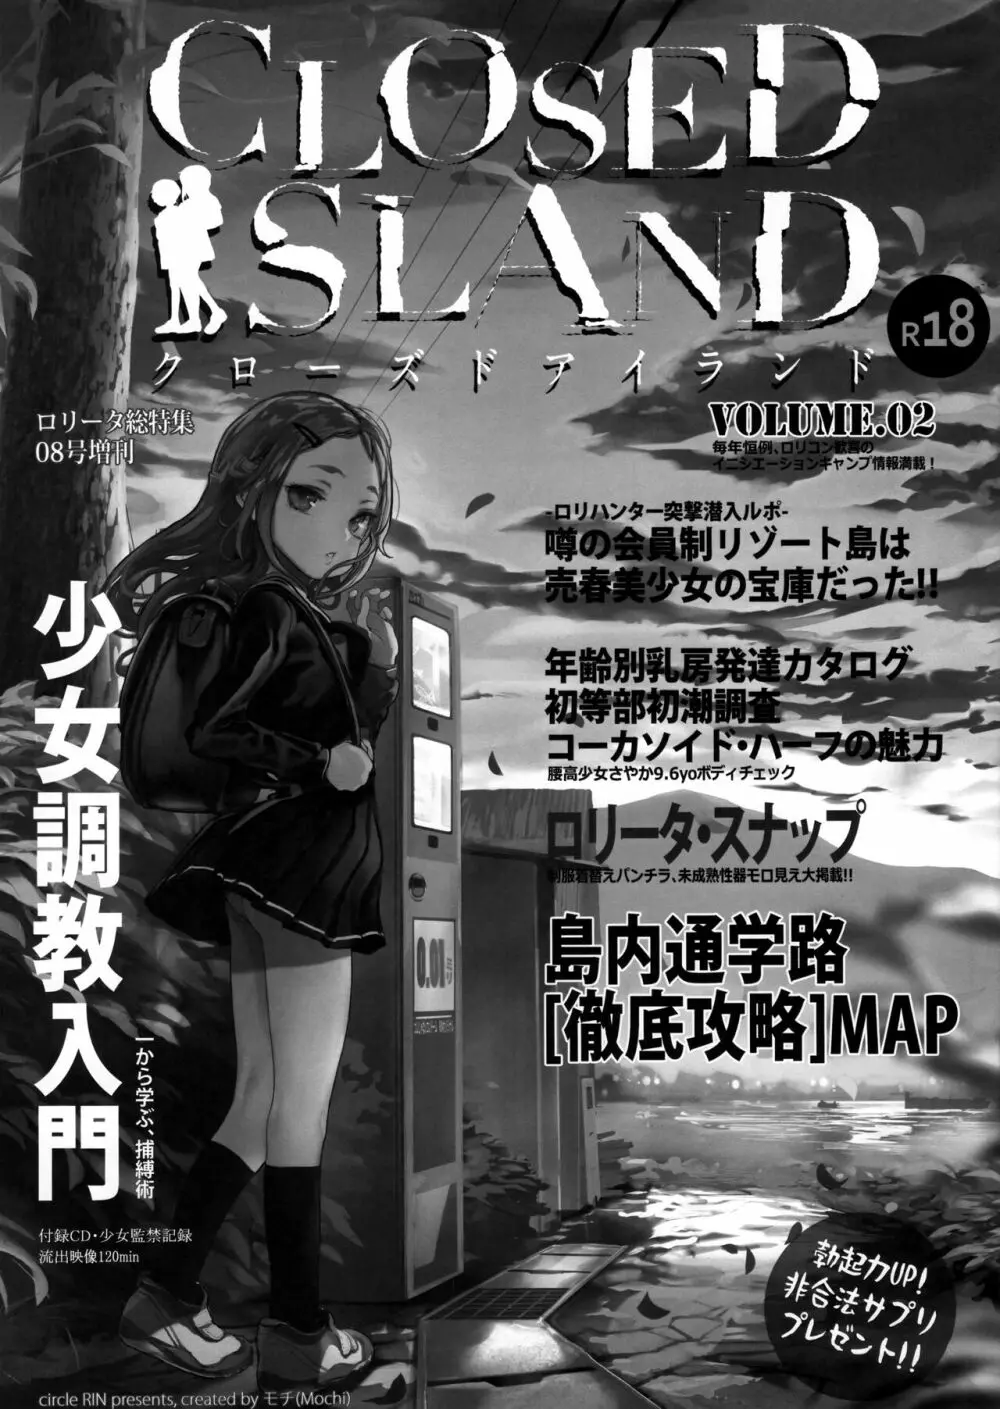 CLOSED ISLAND Volume.2 - page1